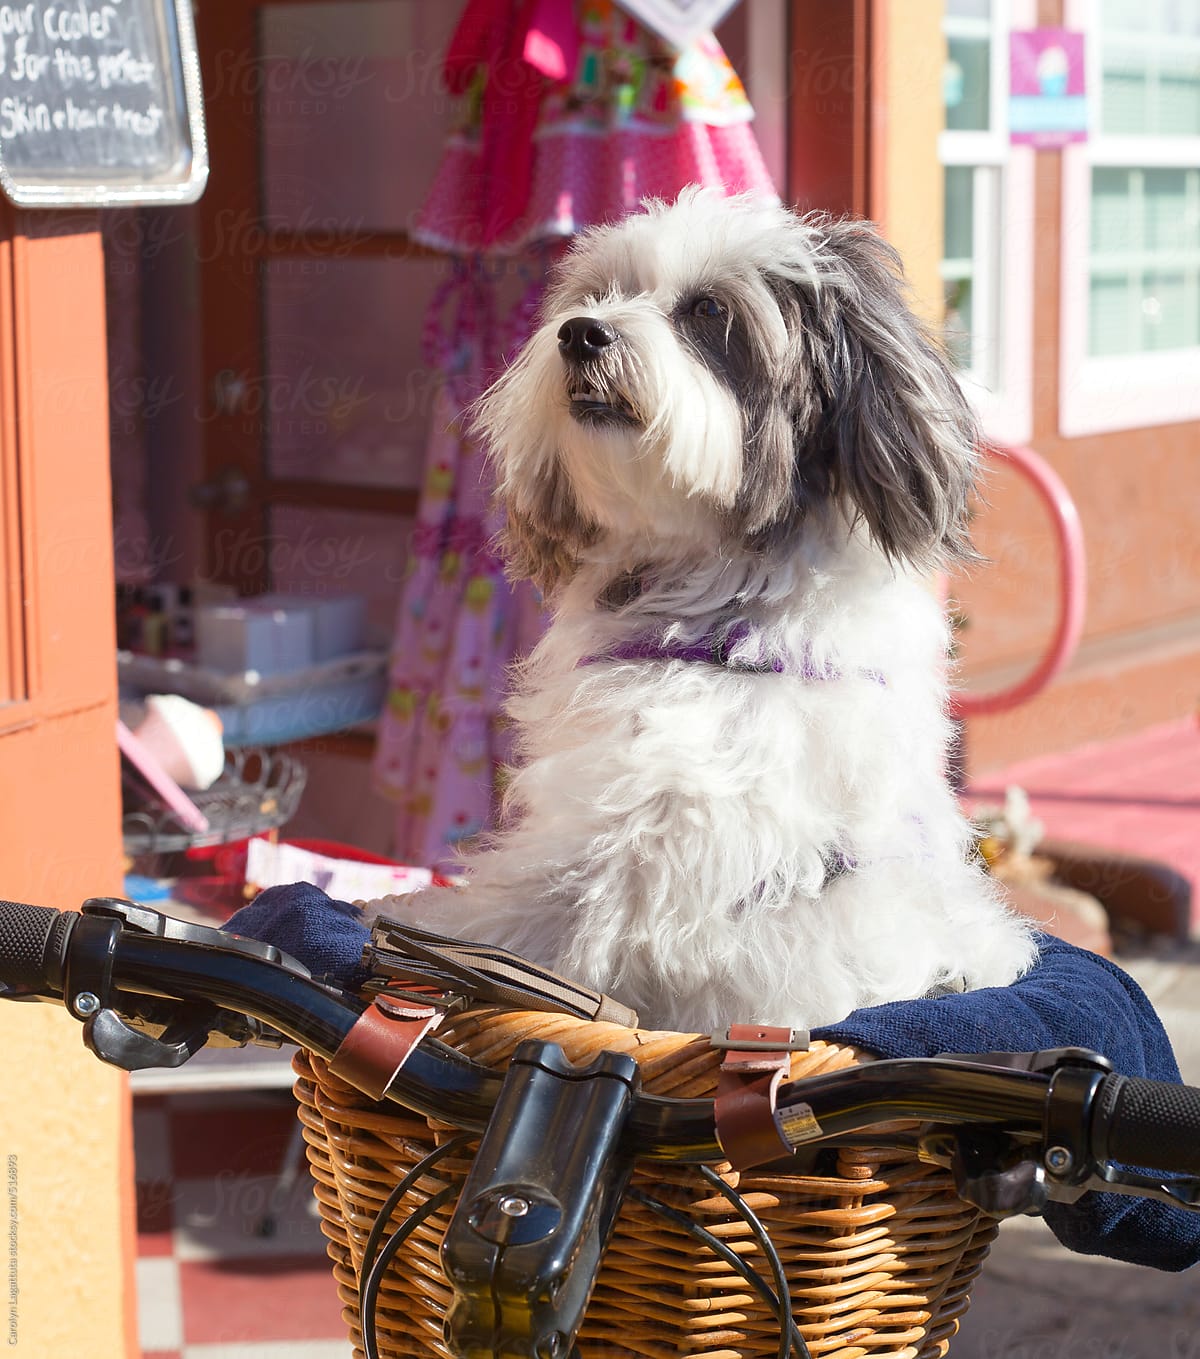 Cute little dog sitting in the basket of a bike